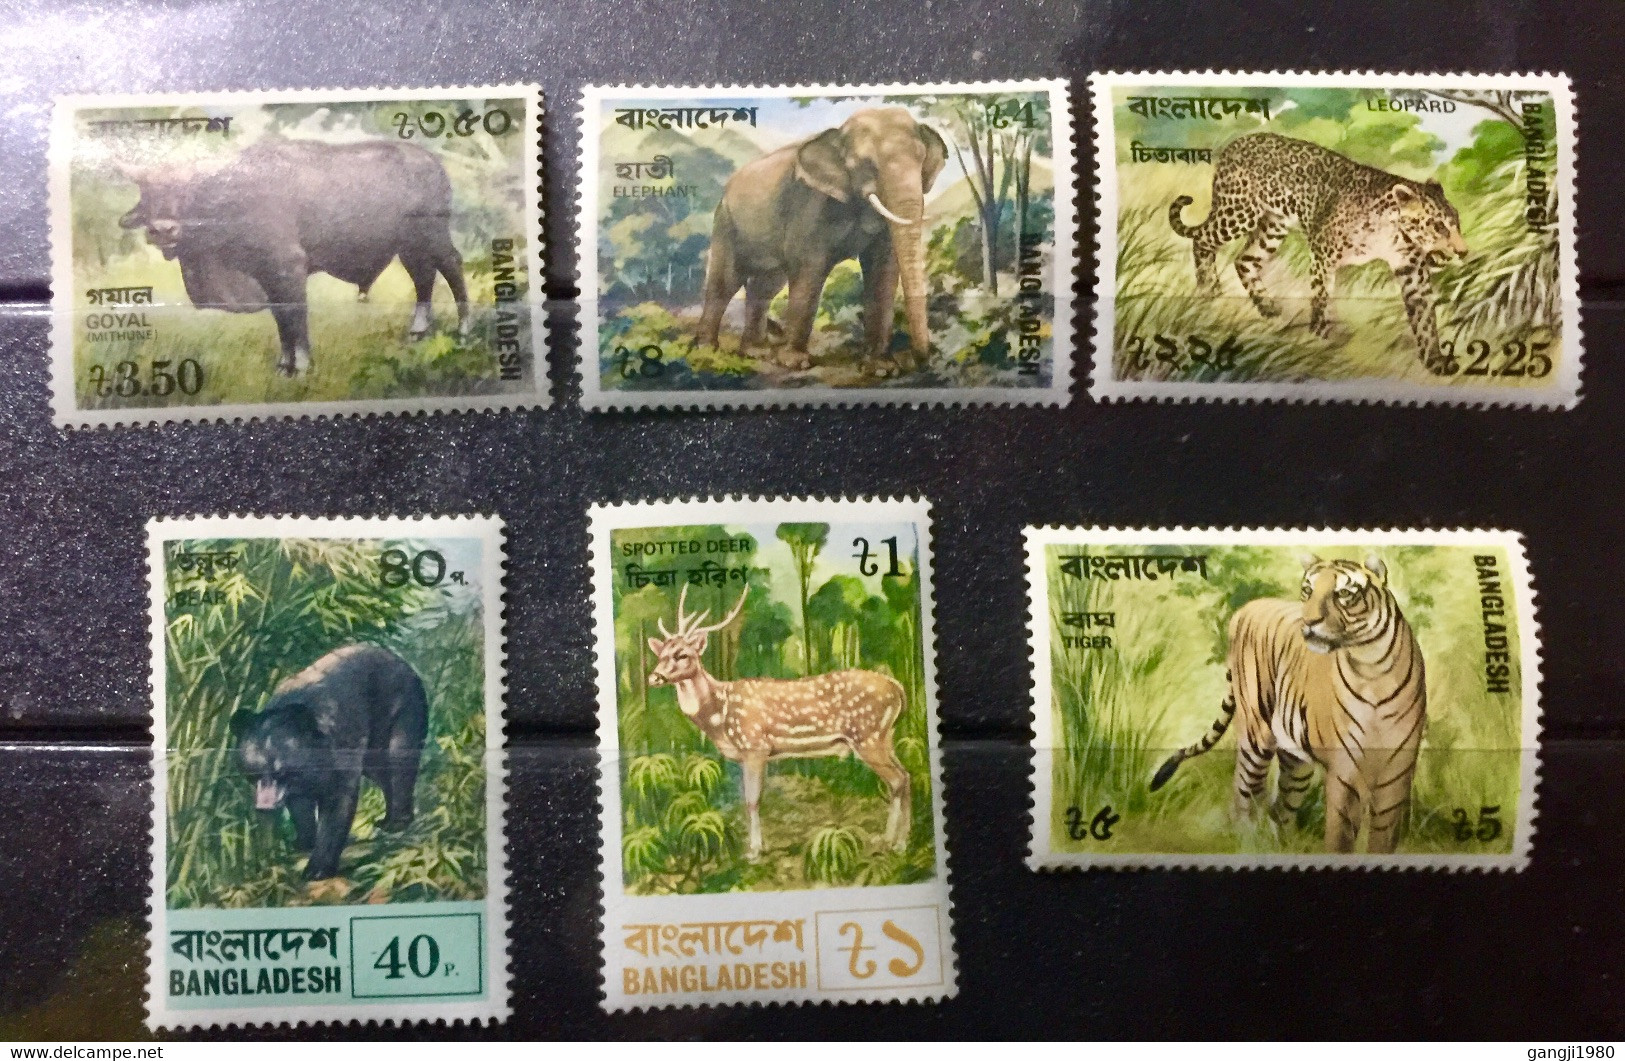 BANGLADESH 1977 MNH STAMP ON WILD ANIMALS GOYAL, ELEPHANT, LEOPARD,BEAR,DEER &TIGER 6 DIFFERENT ANIMALS - Bangladesh